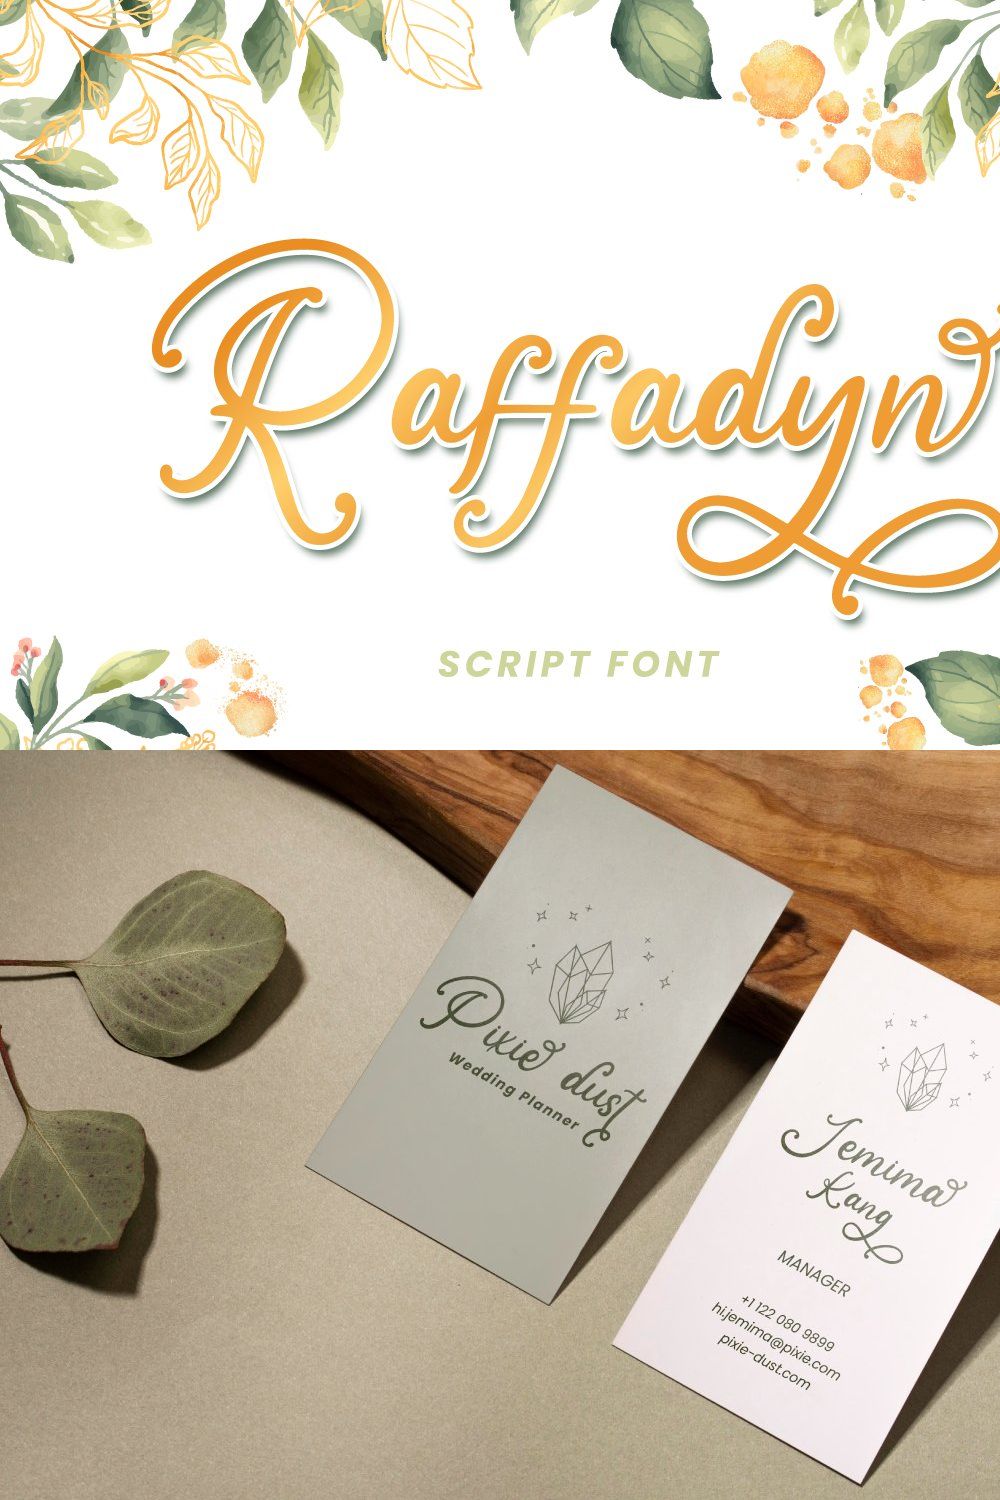 Raffadyn - Wedding Font pinterest preview image.